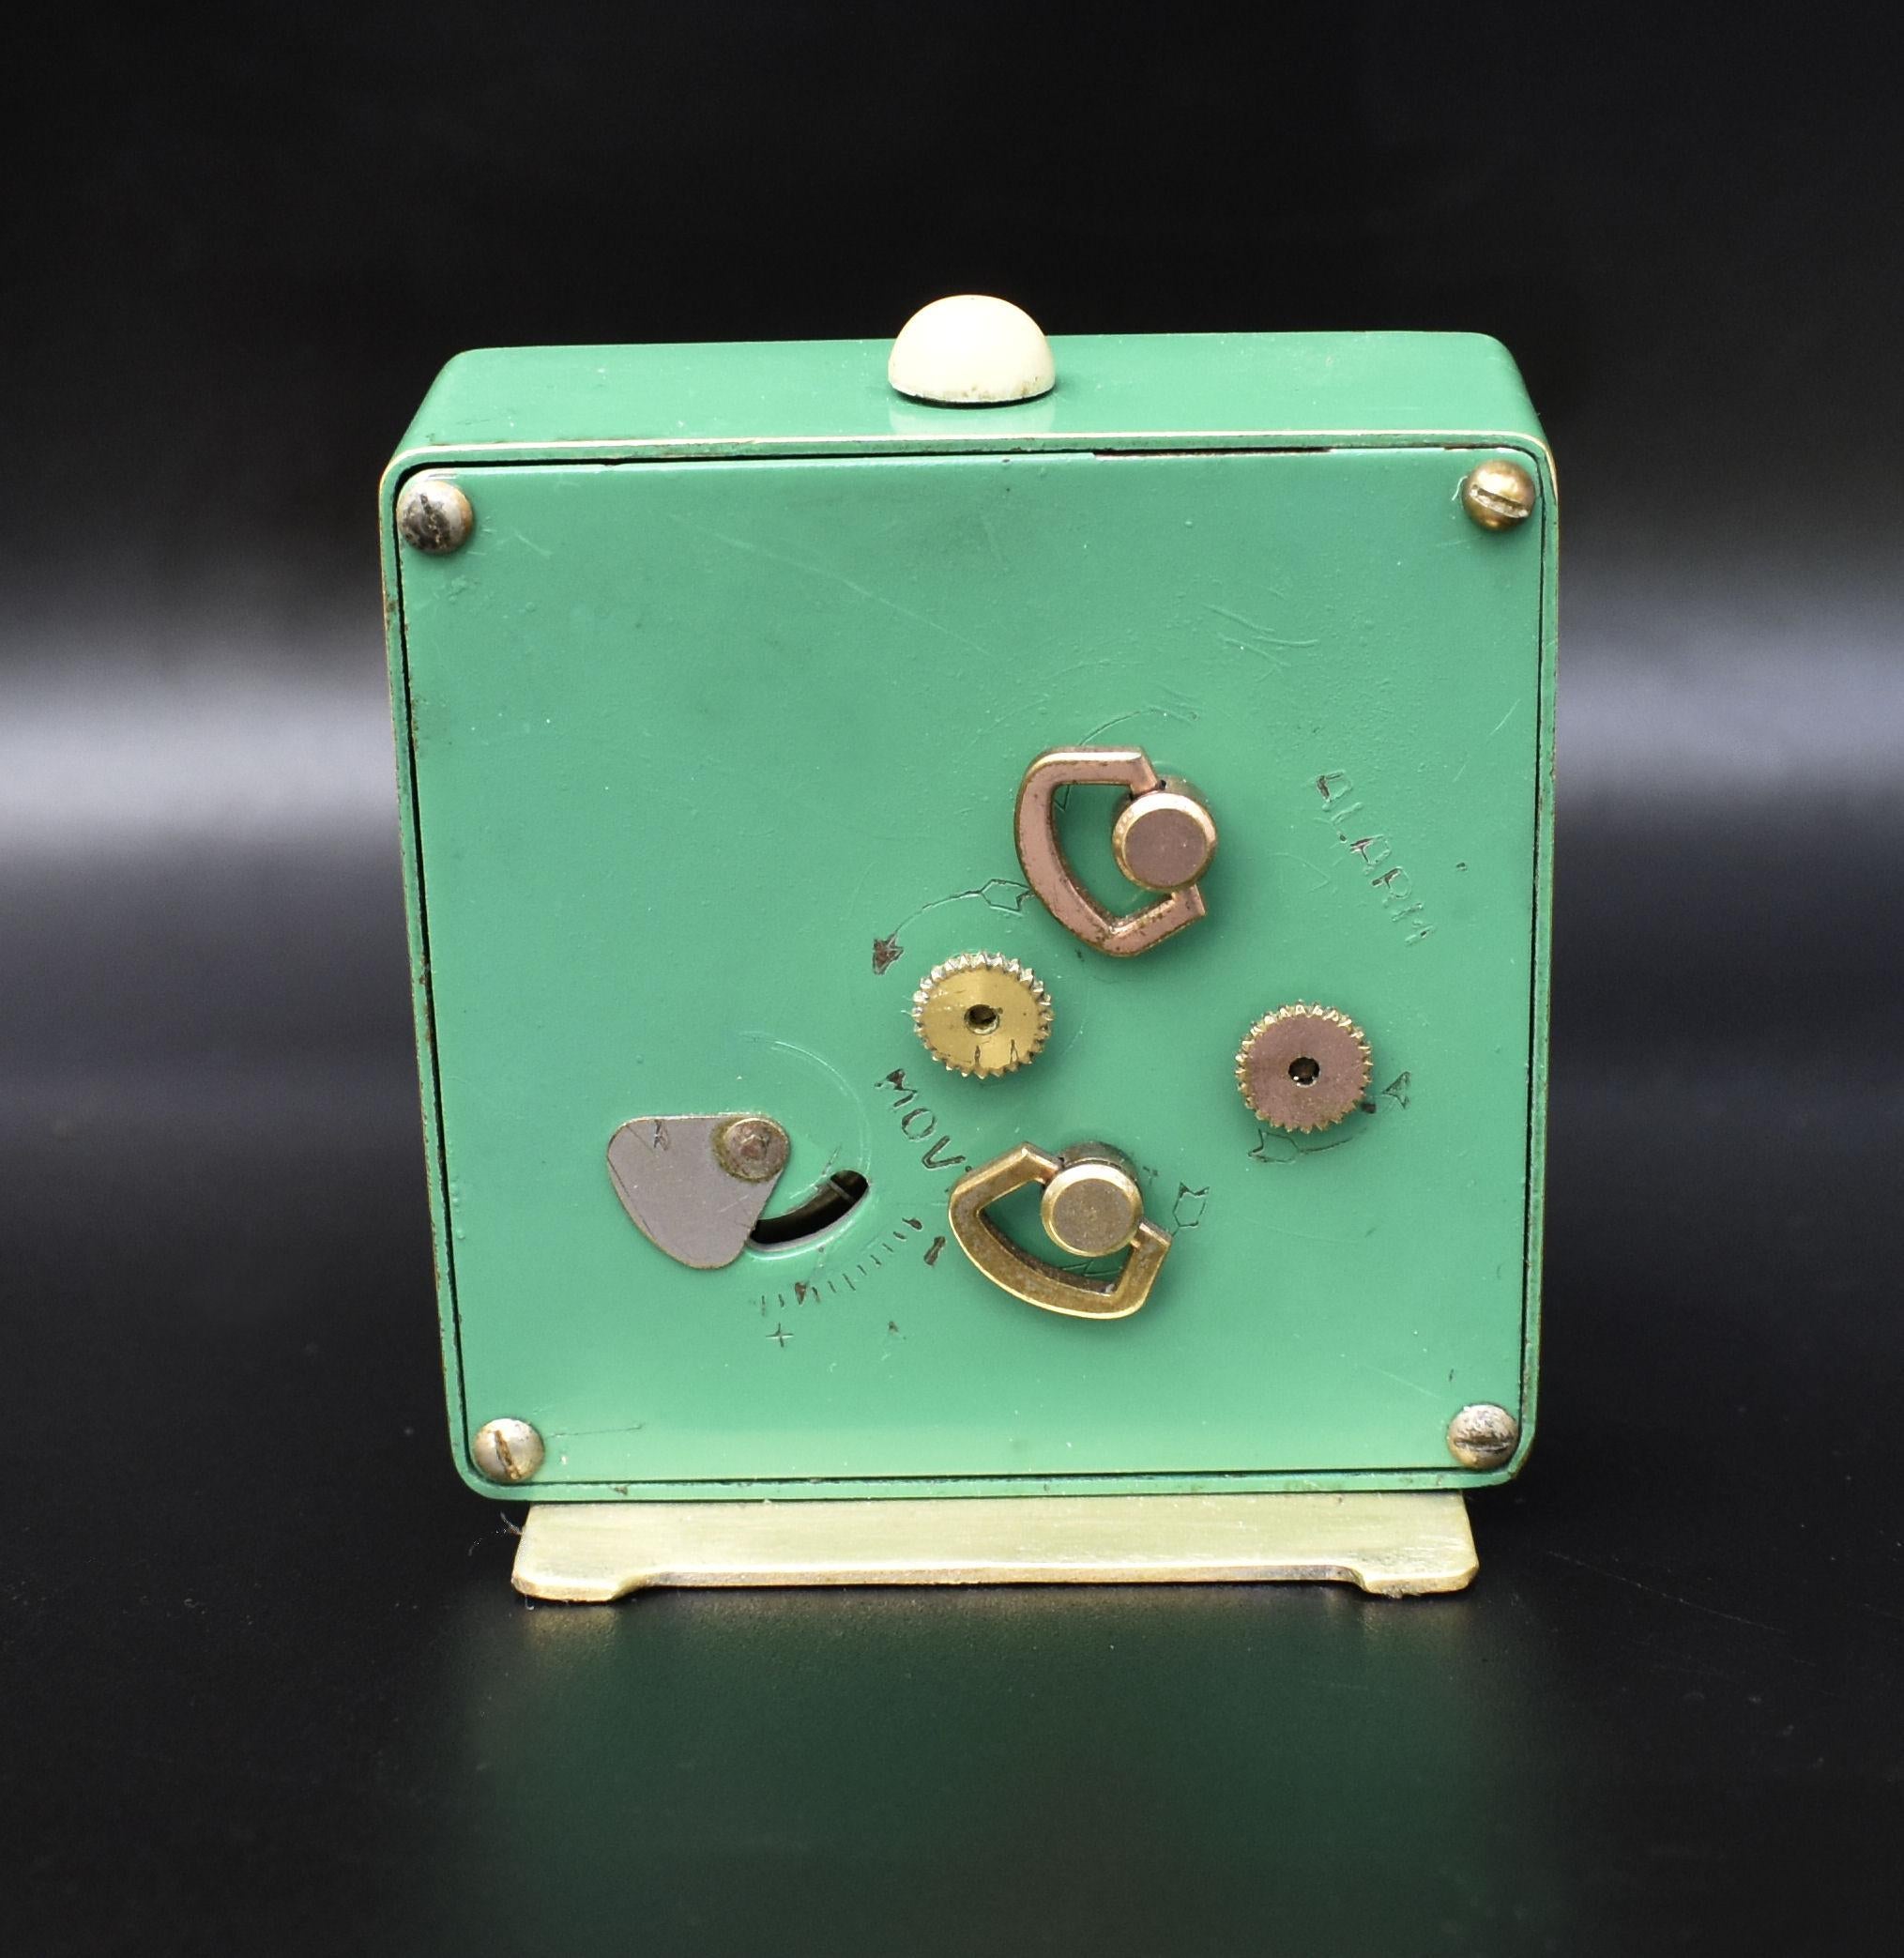 Enameled Art Deco Rare Miniature Alarm Clock by Jaeger-LeCoultre, c1930 For Sale